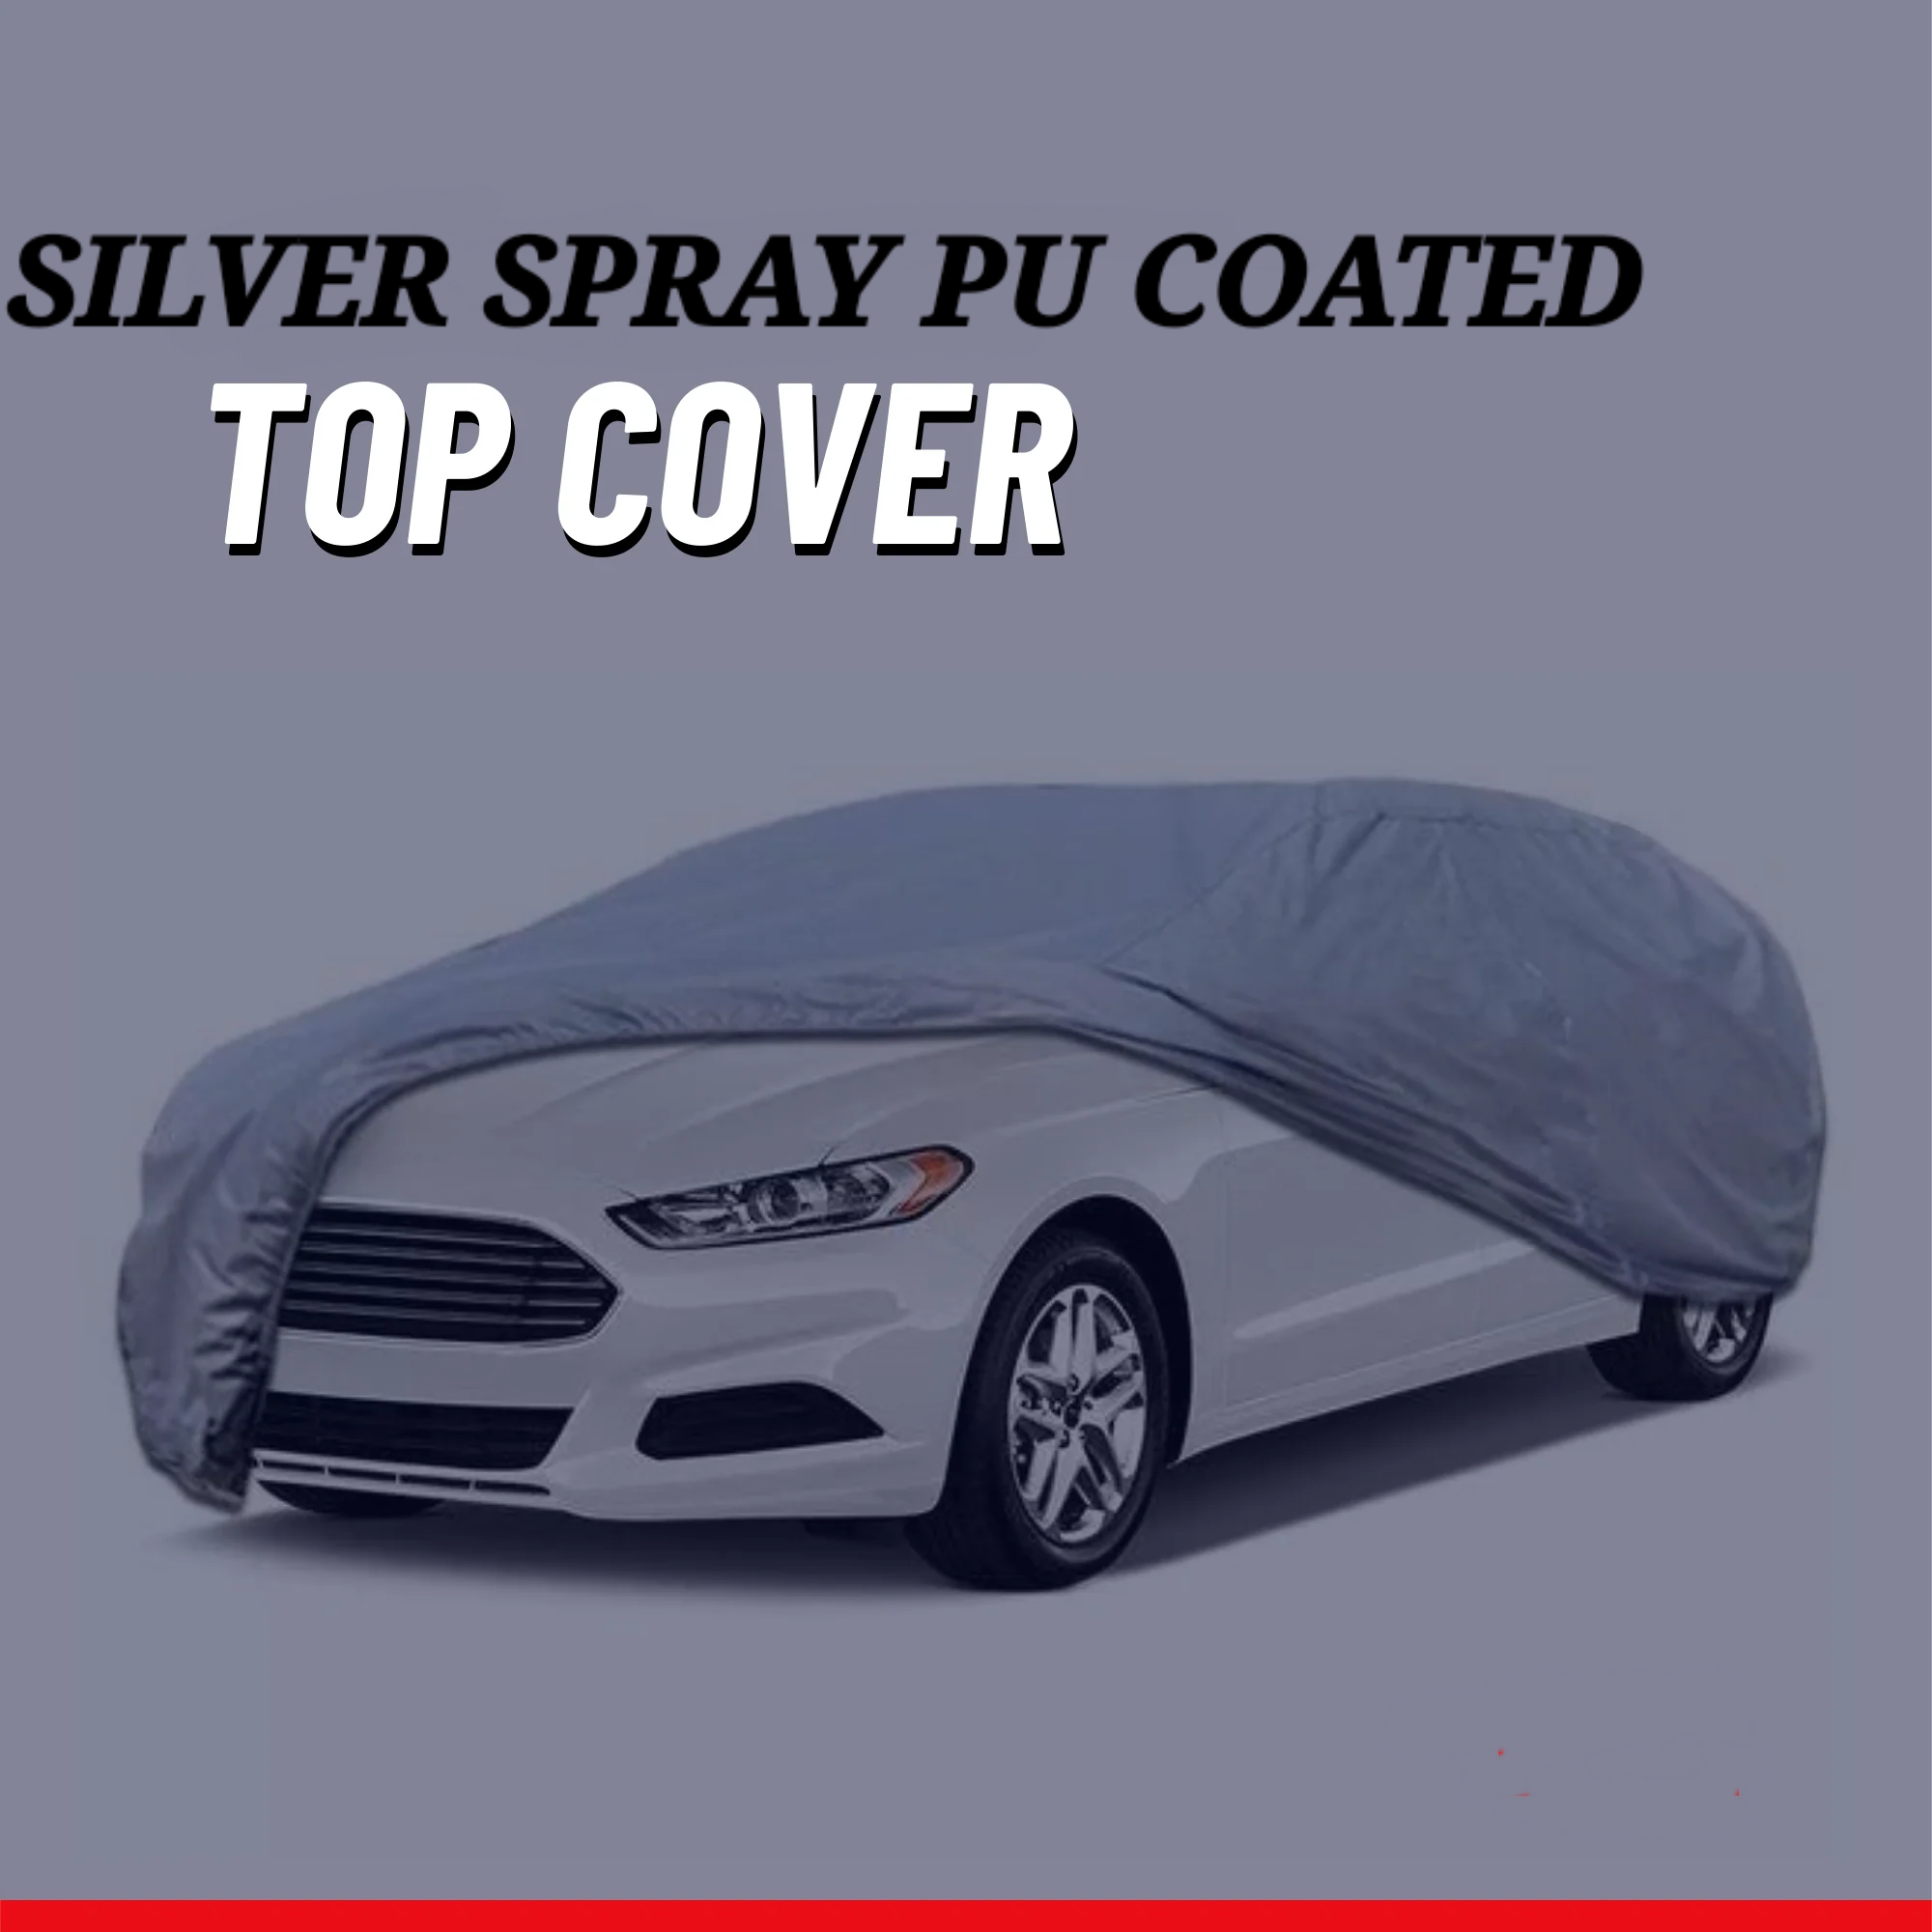 Suzuki Cultus 2017-2023 Car Top Cover - Waterproof & Dustproof Silver Spray Coated + Free Bag